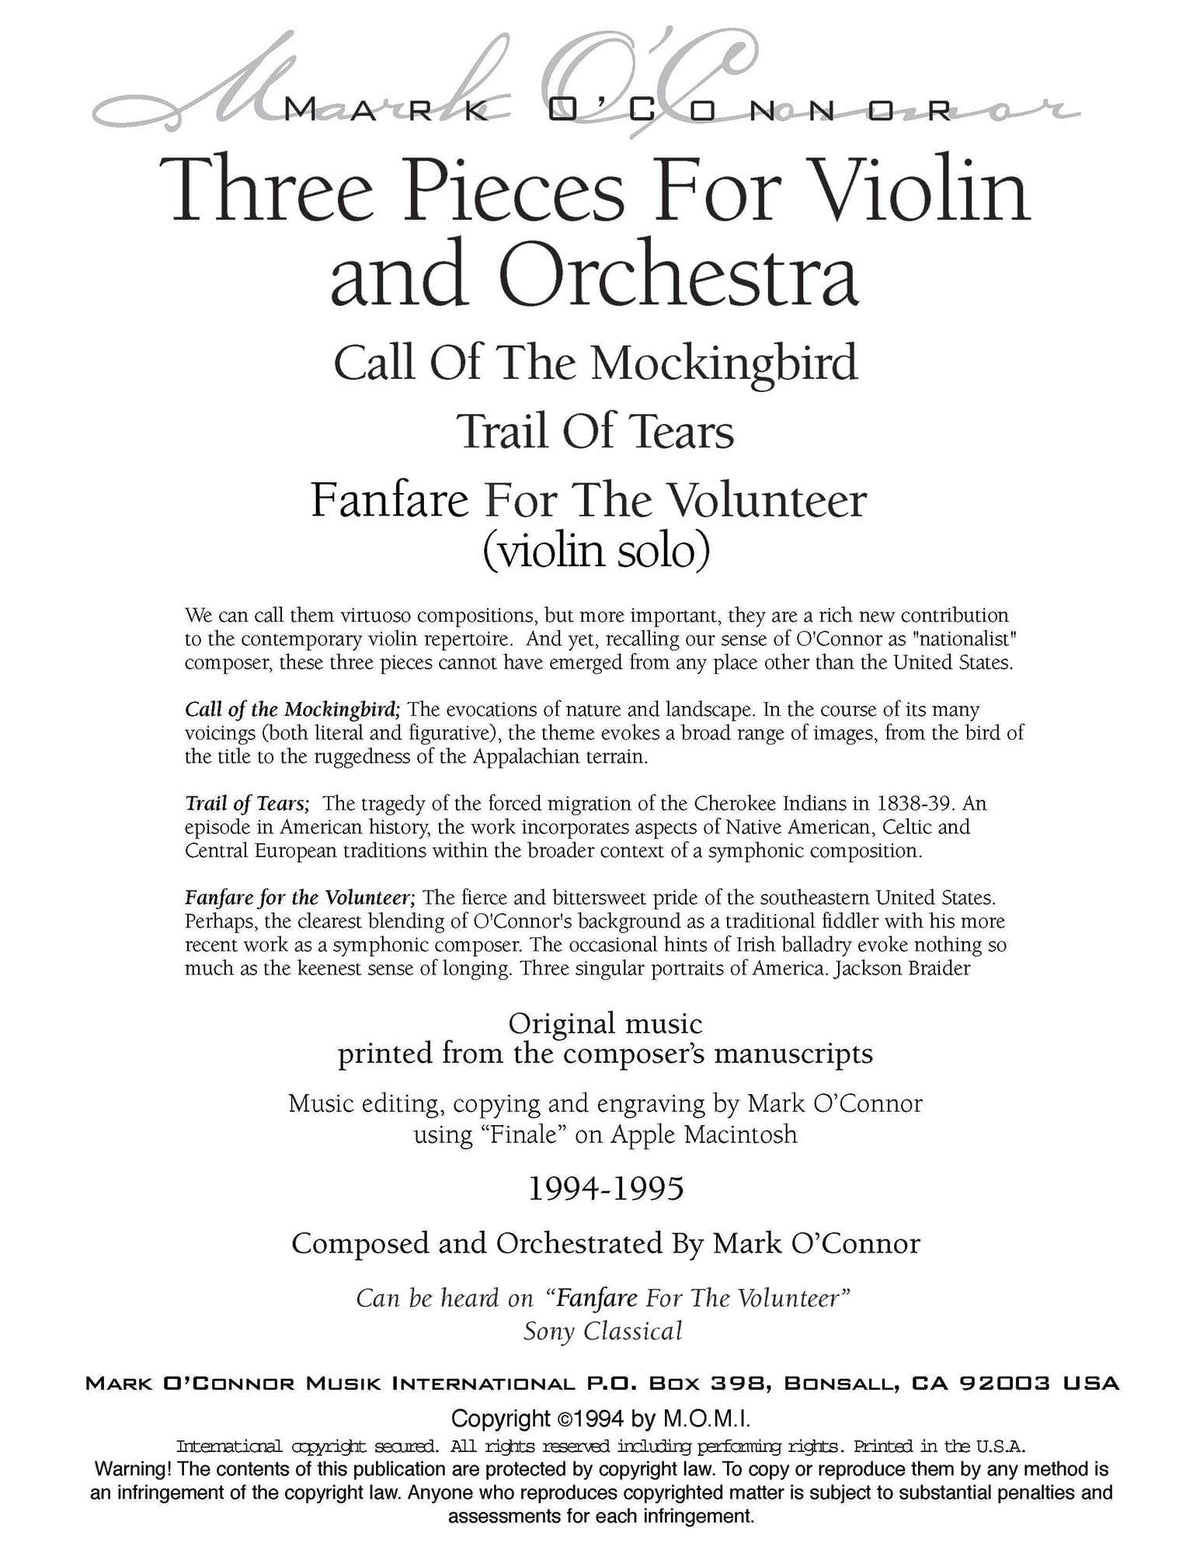 O'Connor, Mark - Three Pieces for Violin and Orchestra - Violin Solo - Digital Download